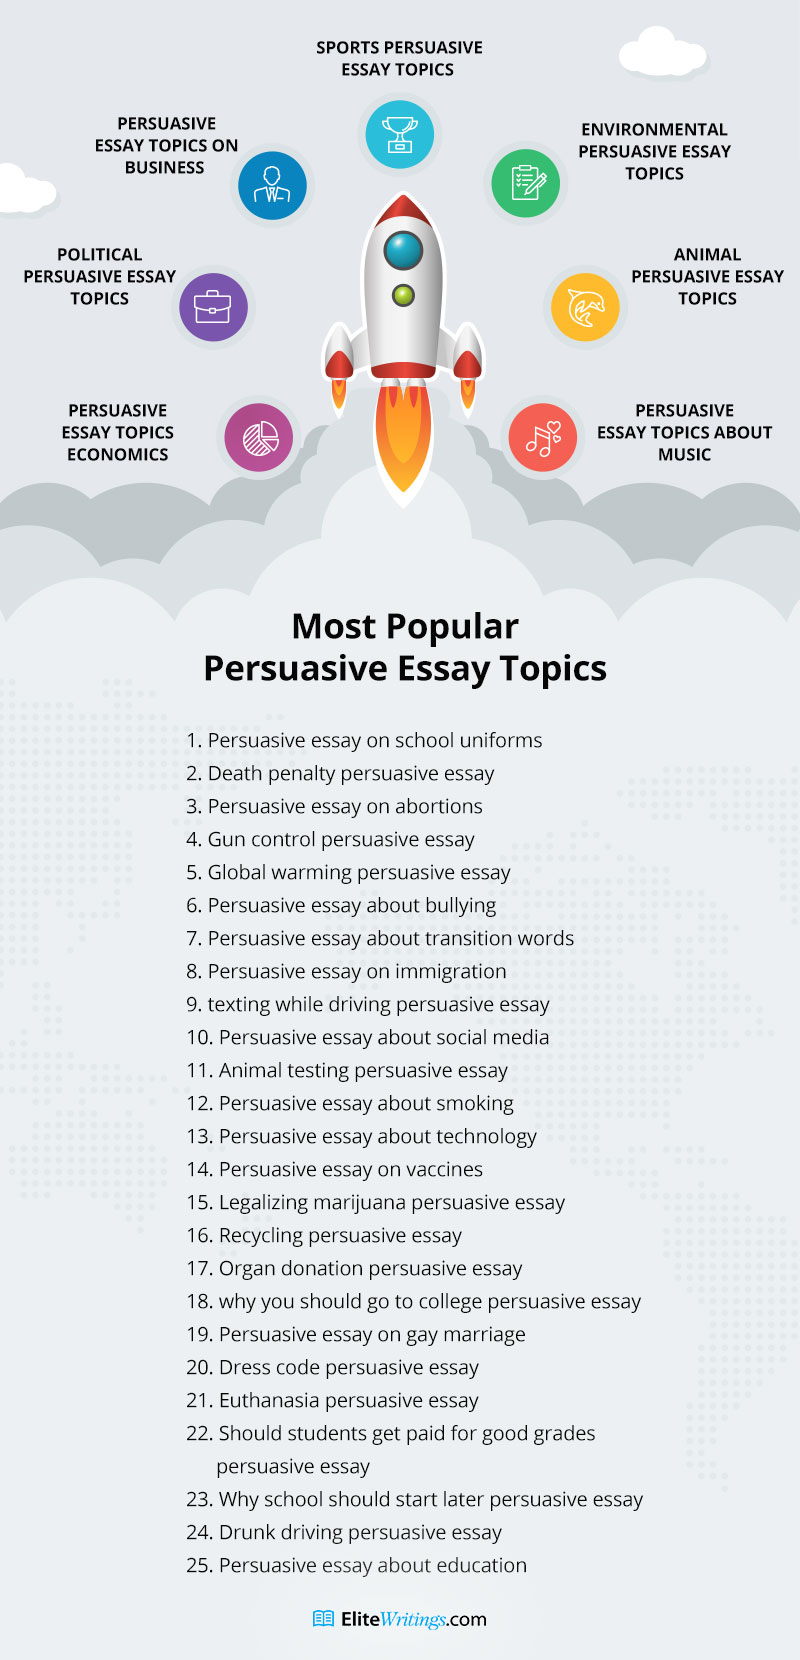 220 Good Persuasive Essay Topics for 2020